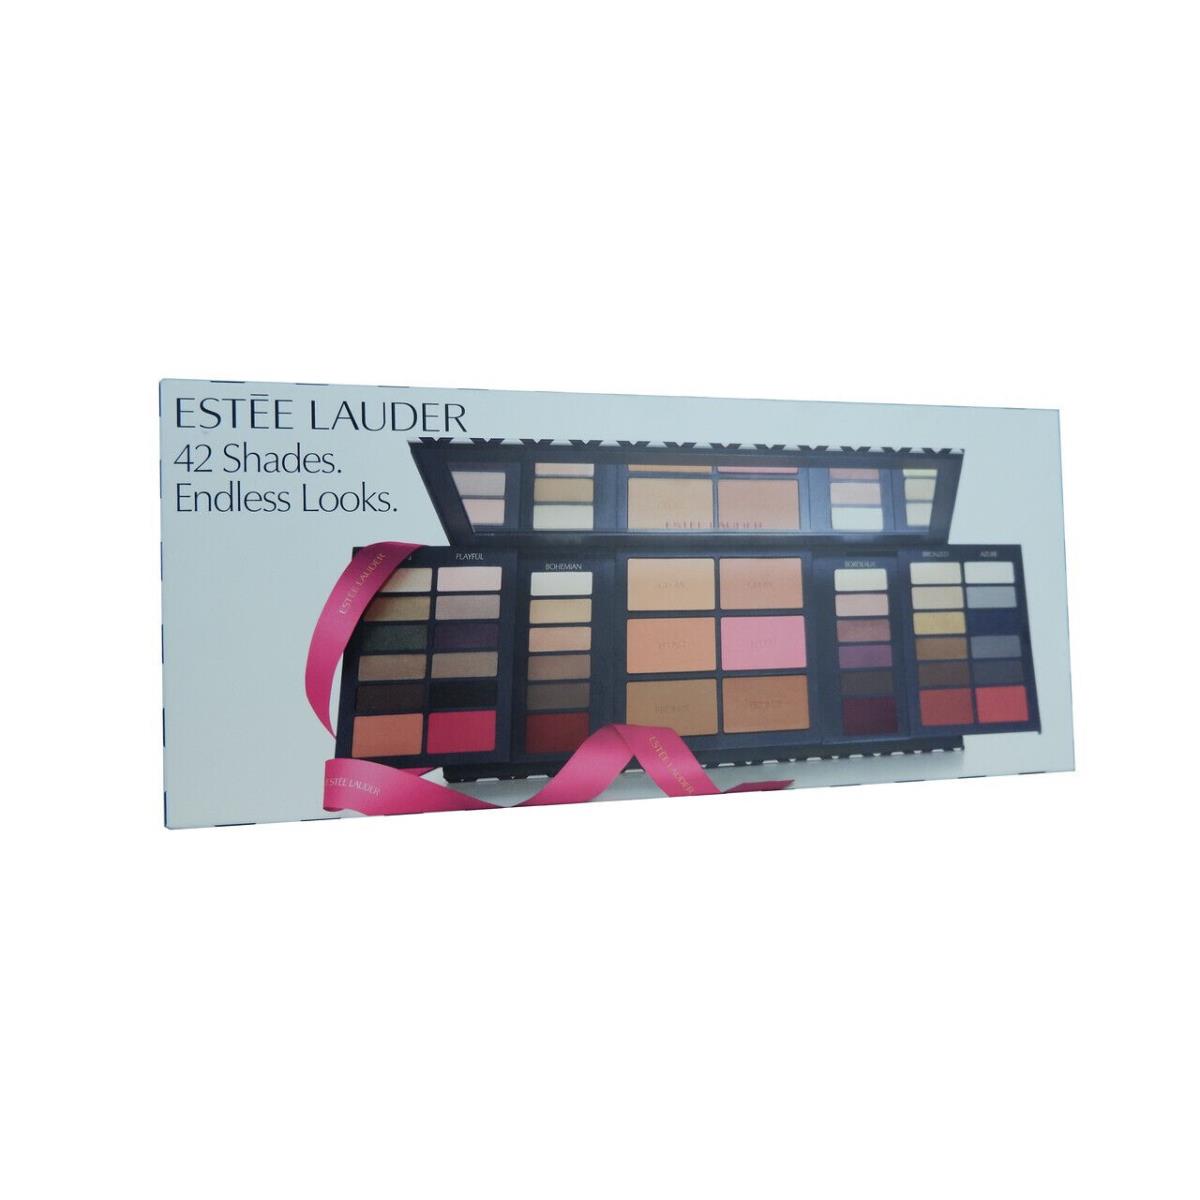 NB Value Estee Lauder Pure Color Envy 42 Shades Palette Eyeshadow+blush+lip